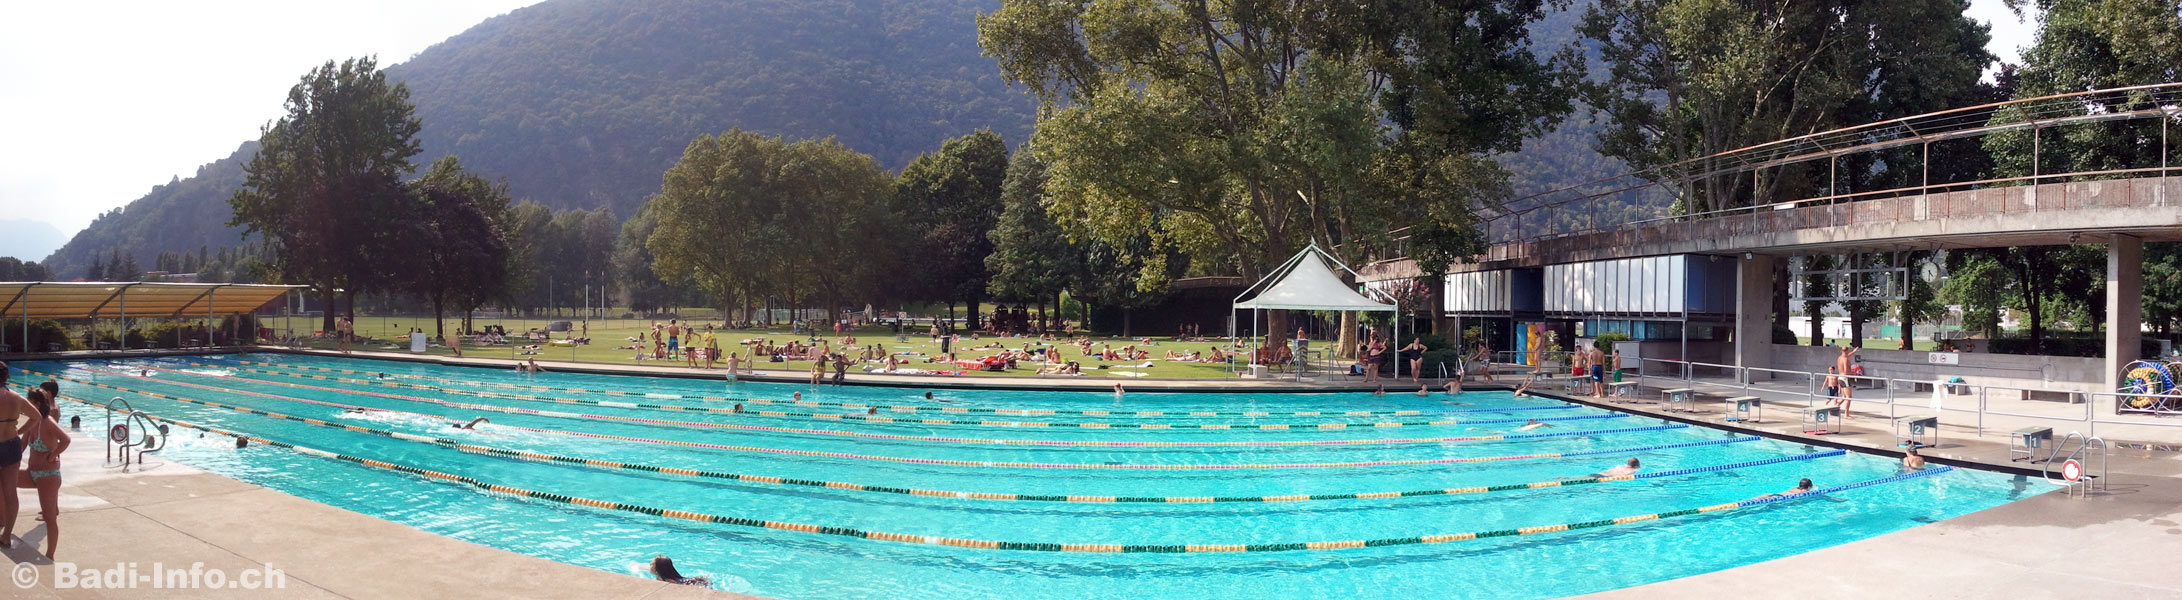 Schwimmbad Bellinzona